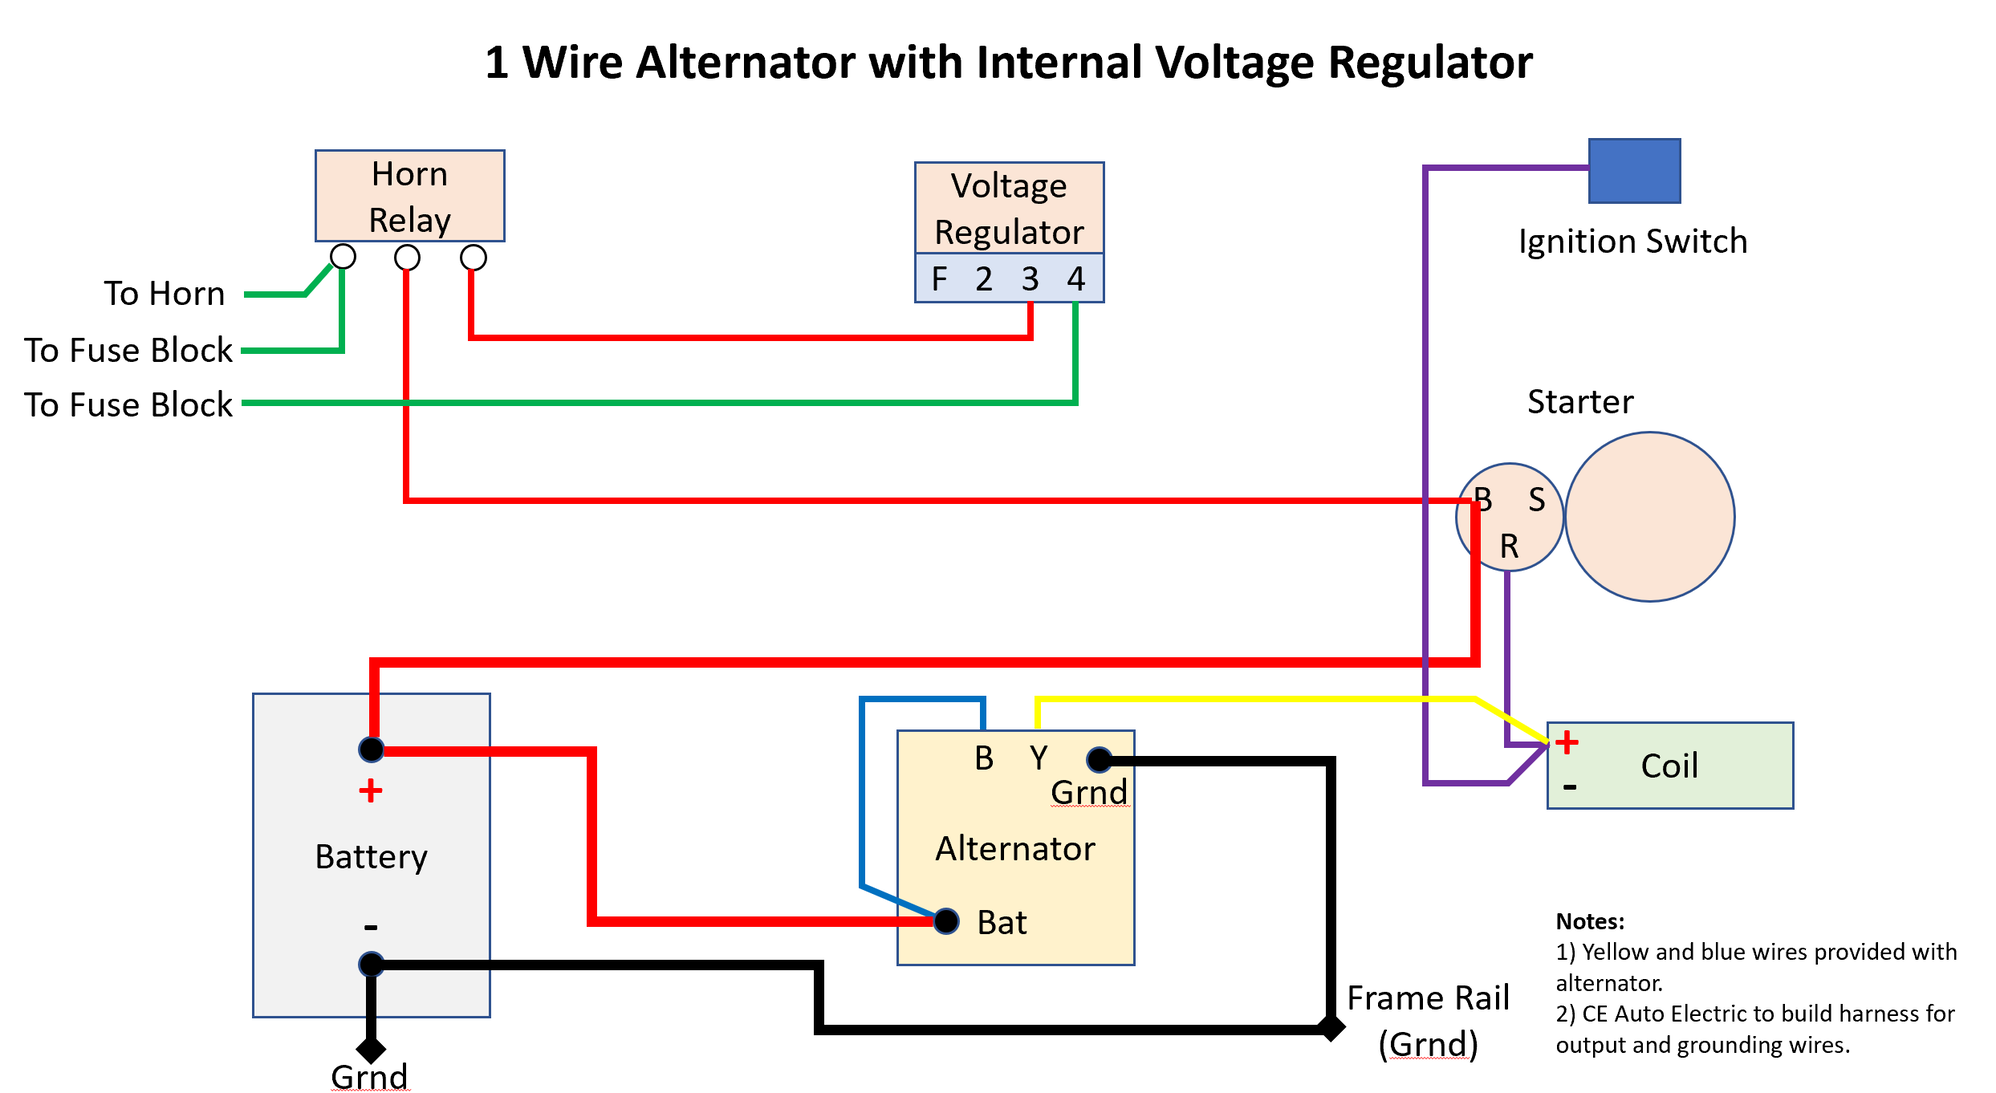 Wiring Diagram Alternator With Built In Regulator - Wiring Diagram